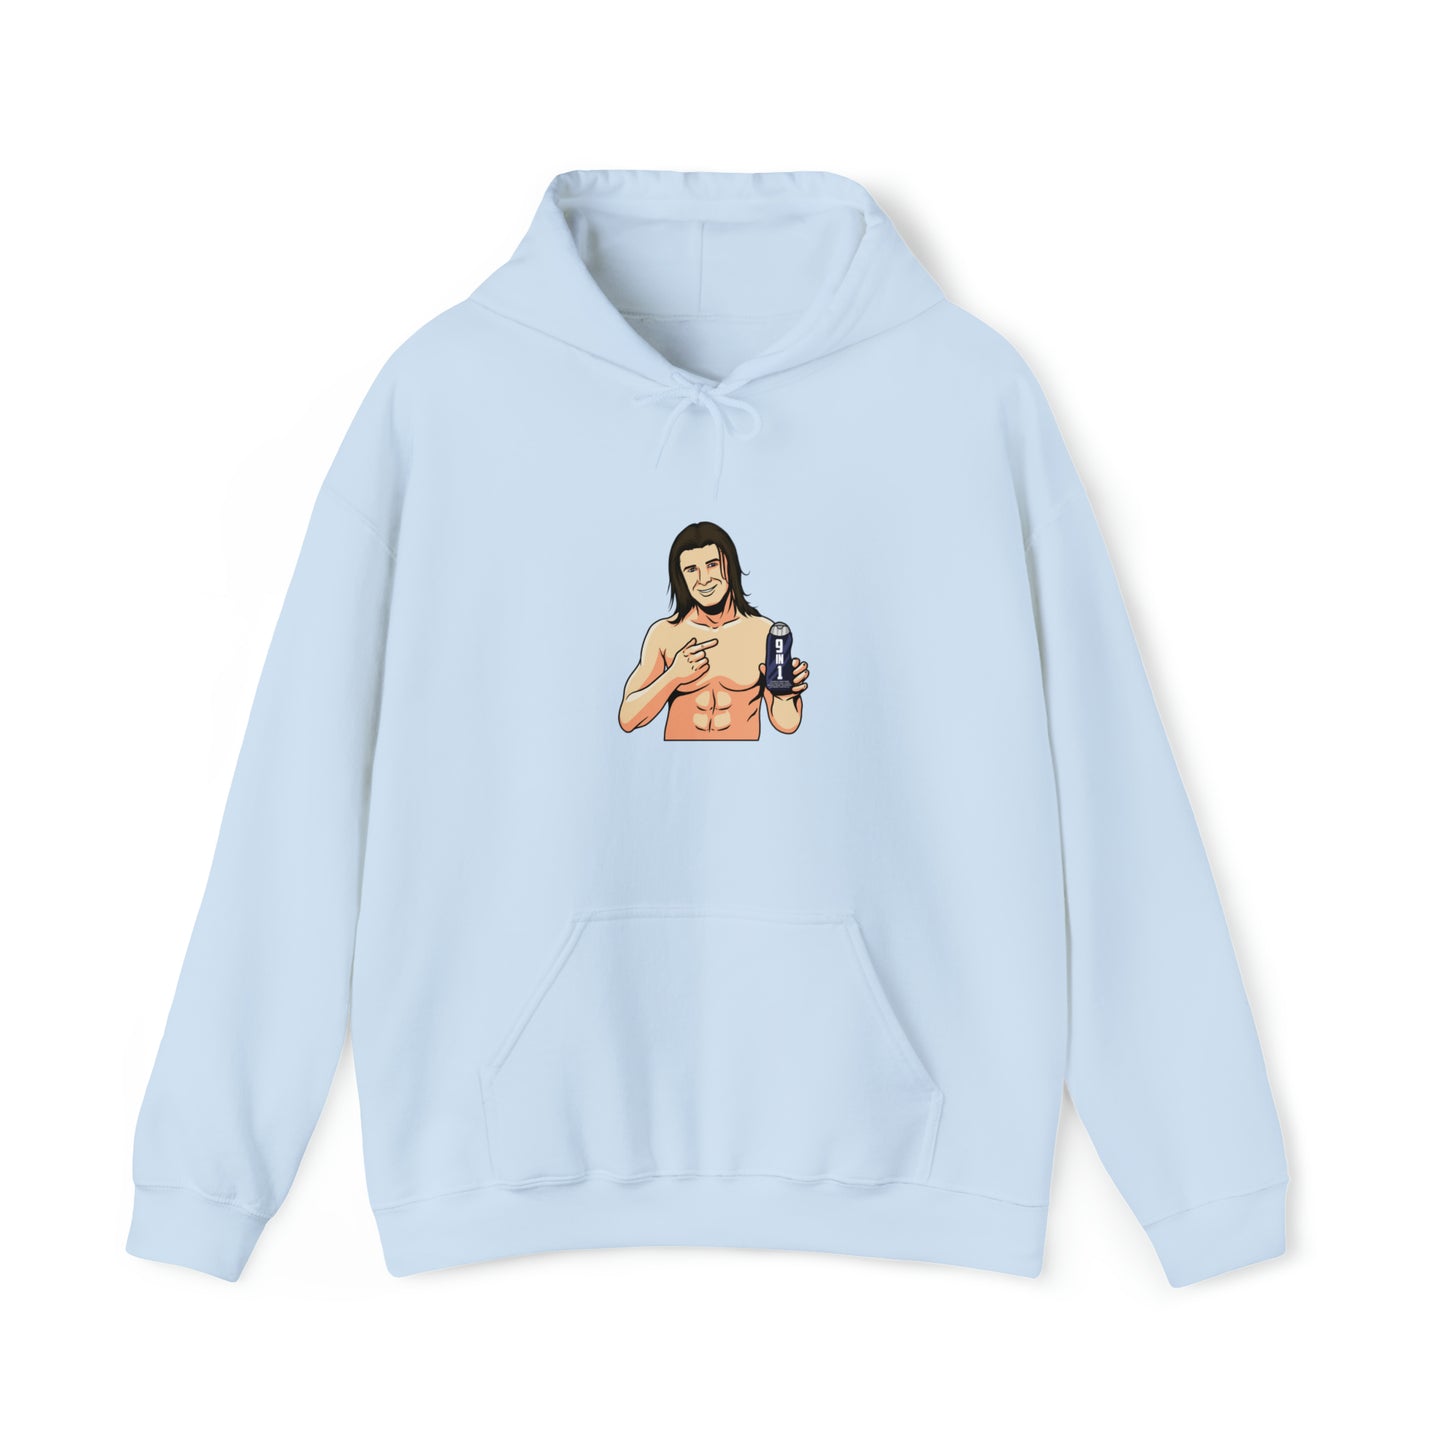 Custom Parody Hooded Sweatshirt, 9 in 1 product design